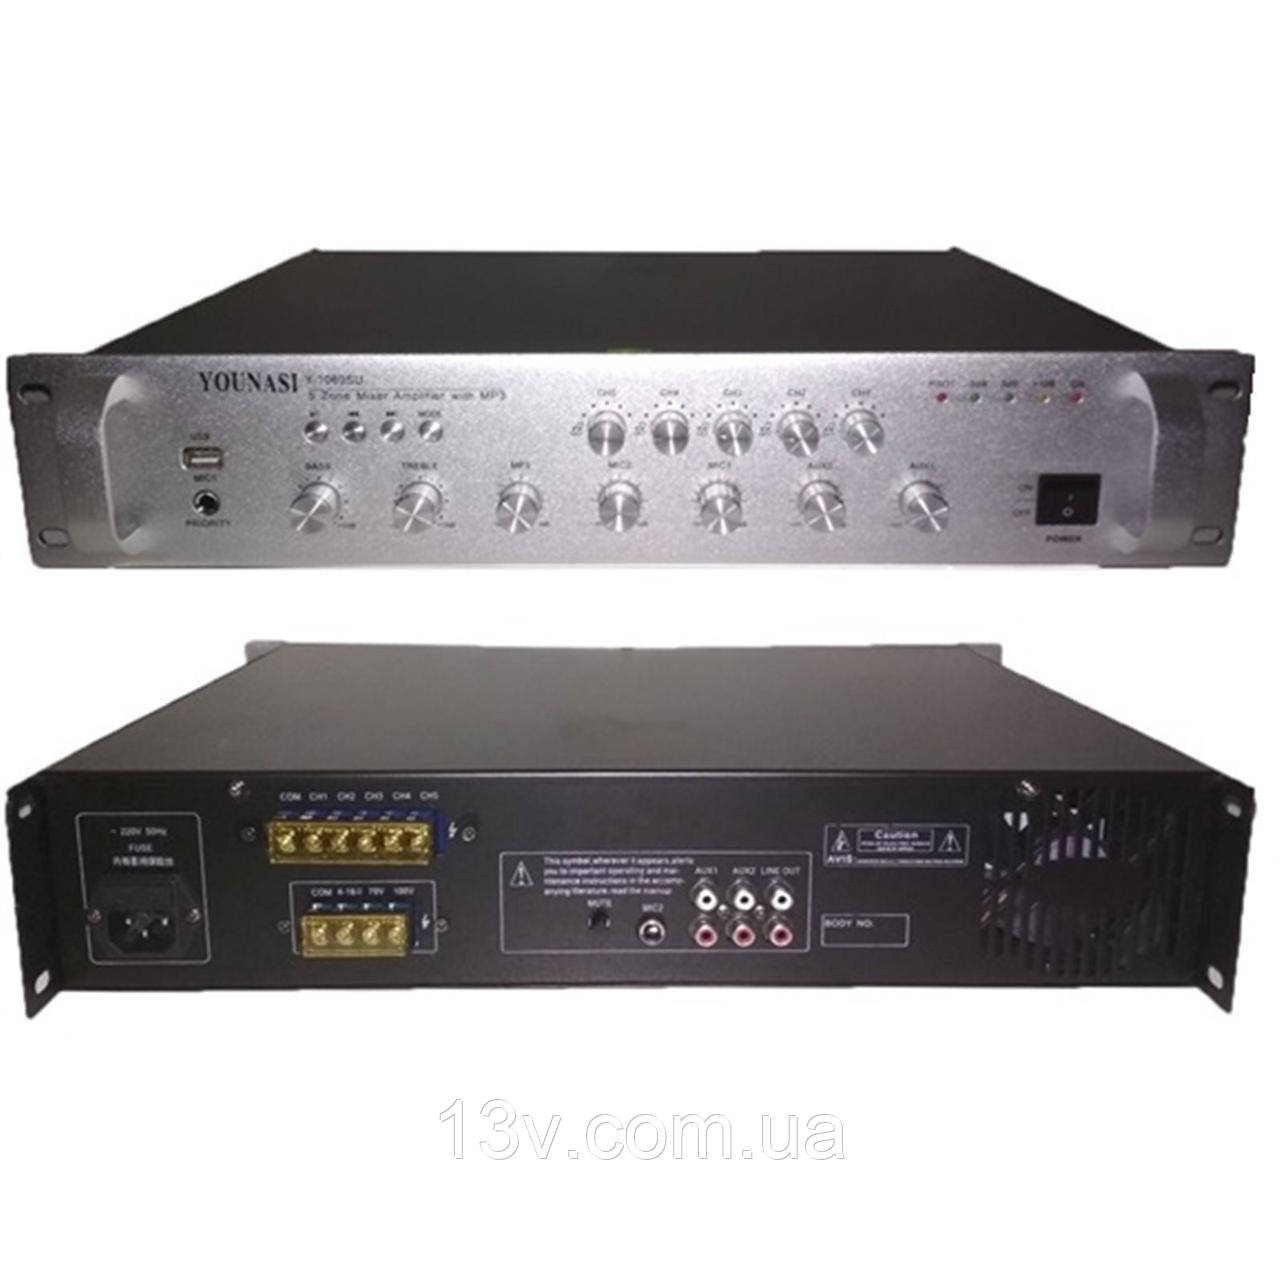 Підсилювач Yonasi Y-1060SU, 60 Вт, USB, 5 zones